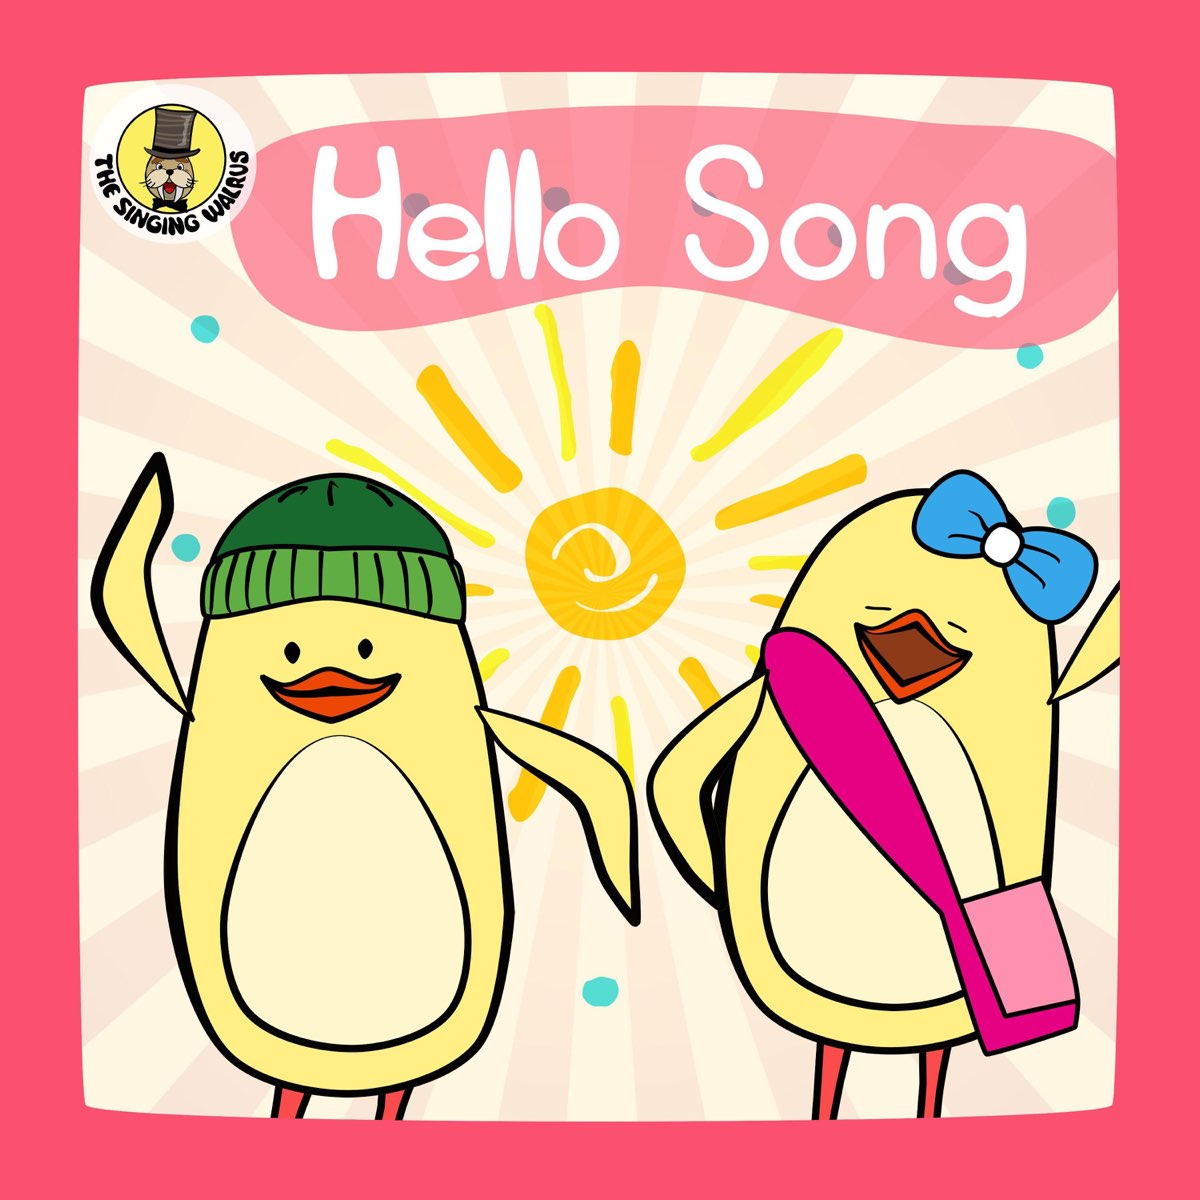 Hello Song. Hello Song singing Walrus. Песня hello Song. Hello Song for Kids the singing Walrus. Английскую песню хеллоу